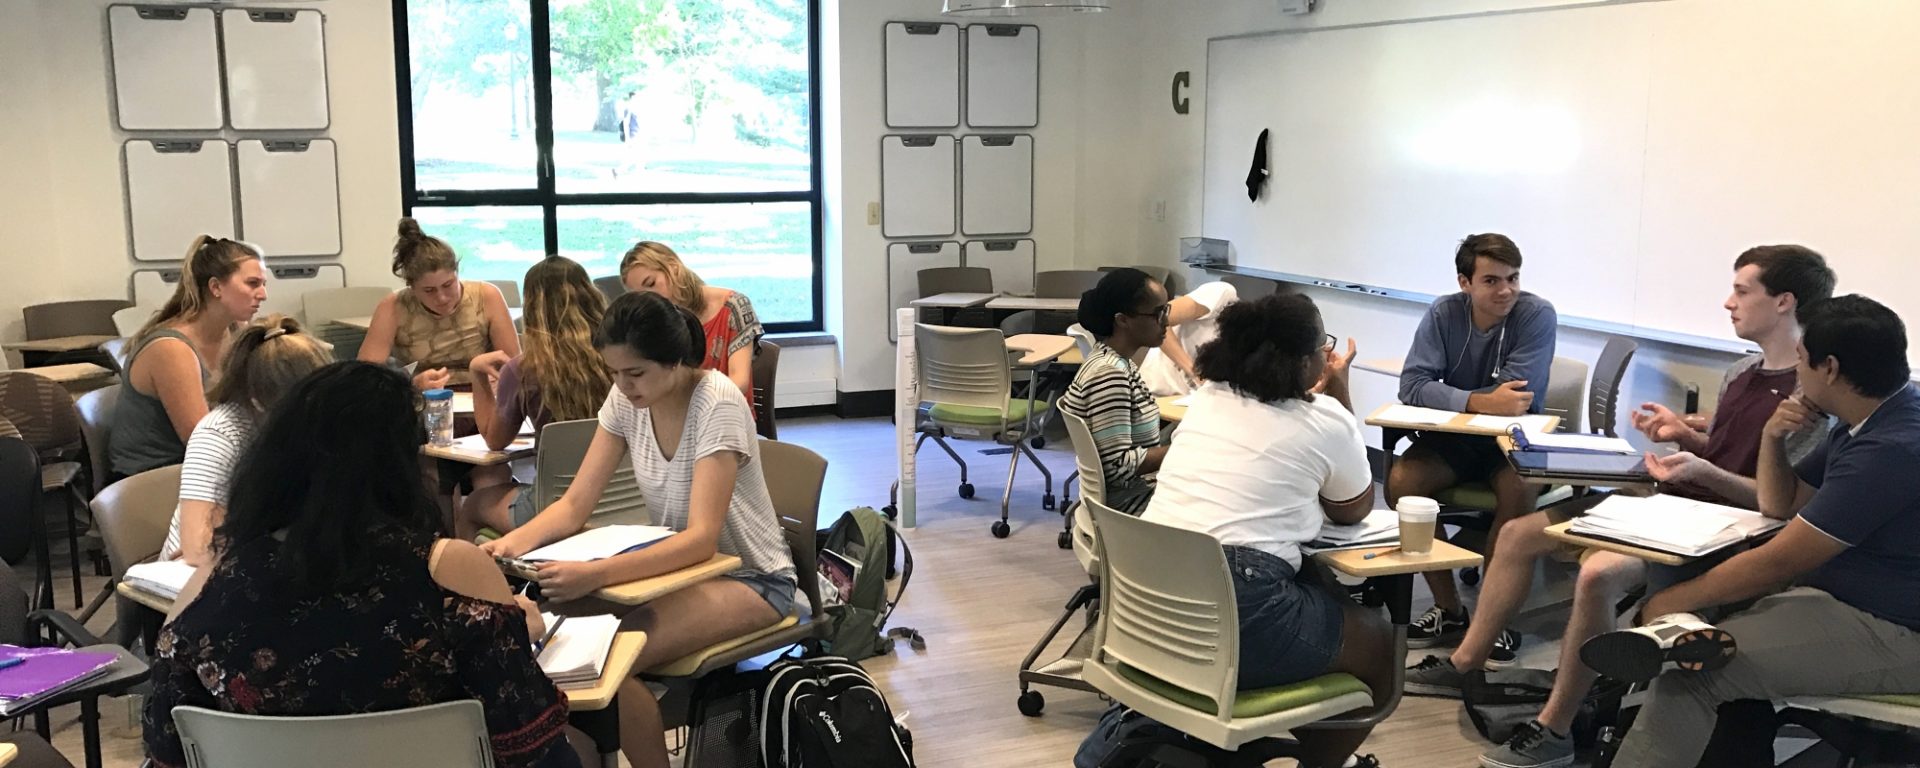 Kohlberg 116 - Active Learning Classroom